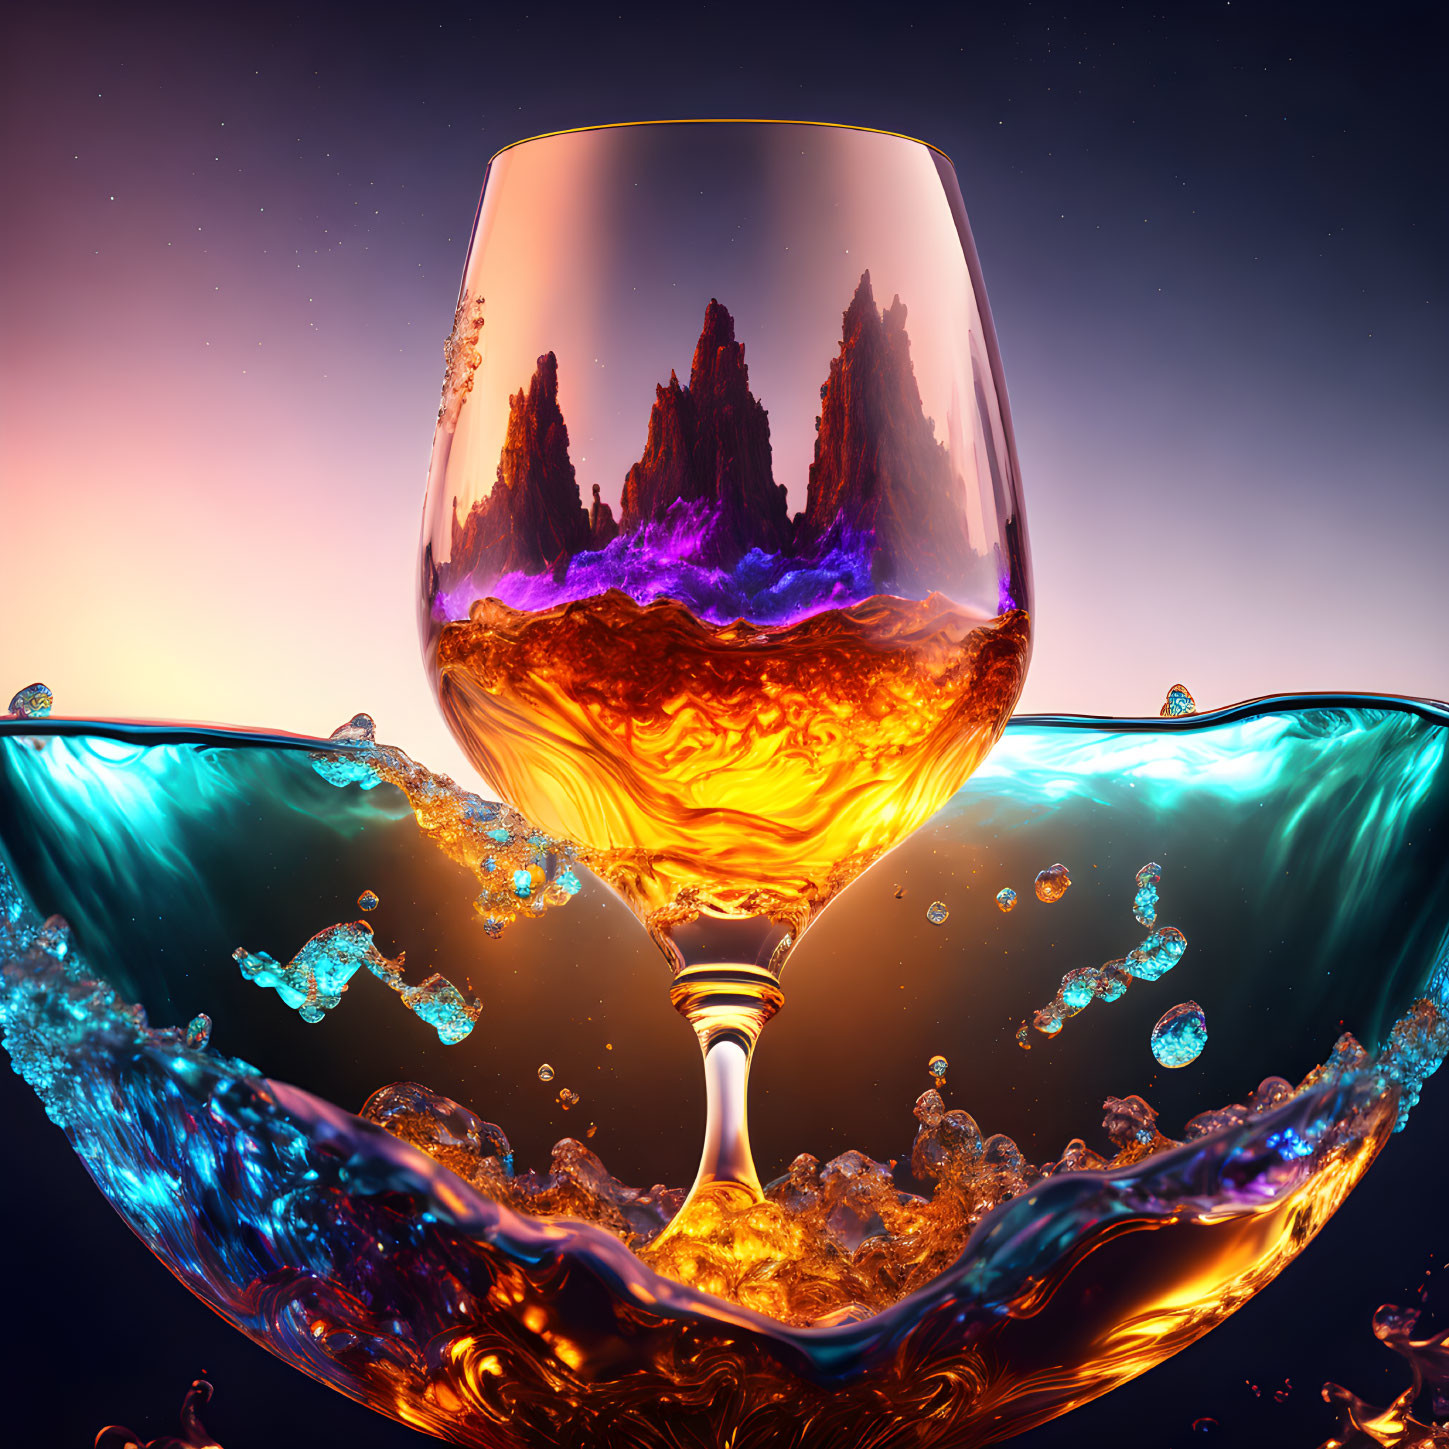 Surreal wine glass with mountain peaks in blue liquid splash